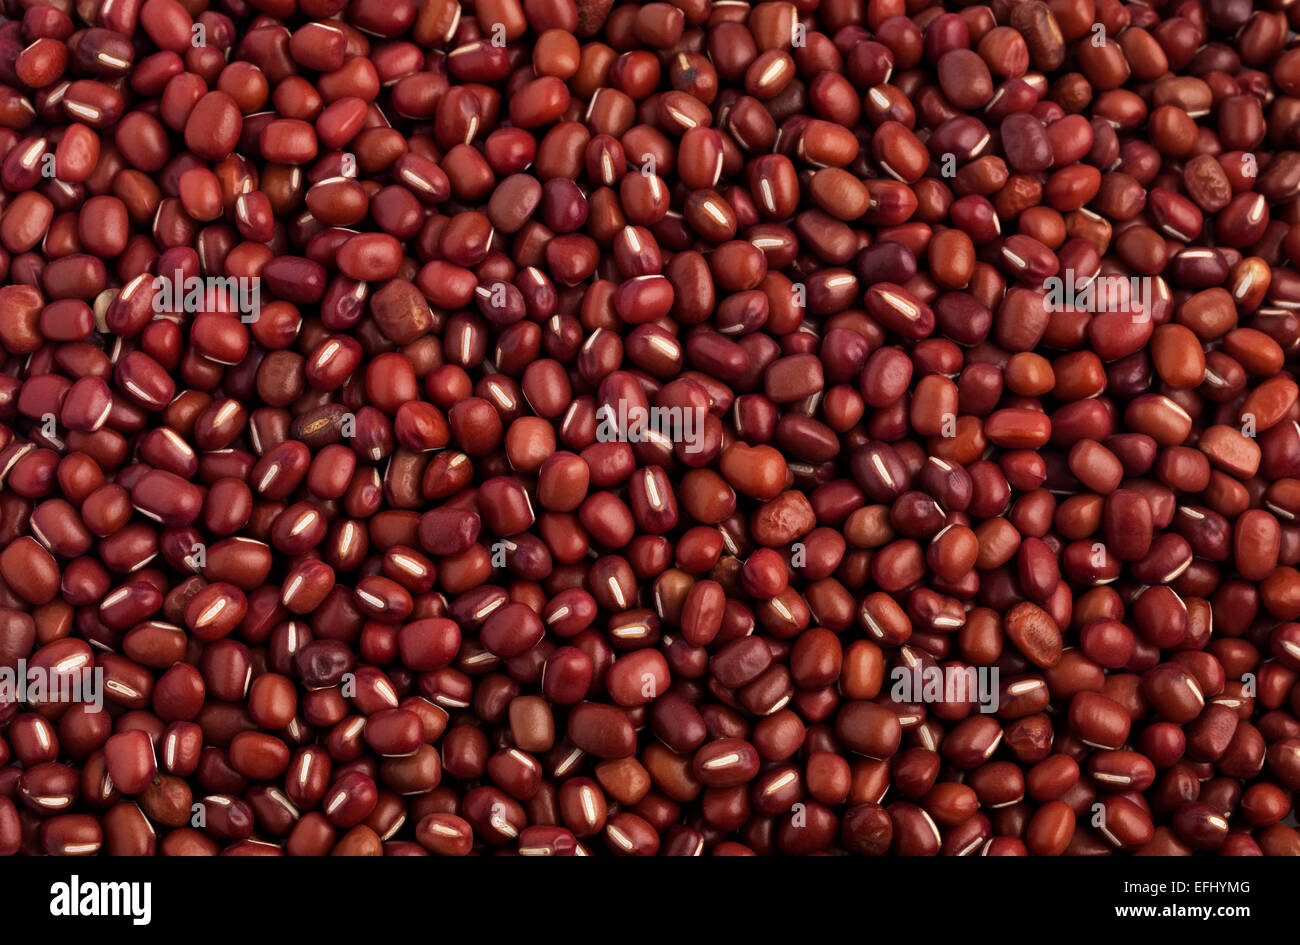 Adzuki Beans full frame Stock Photo